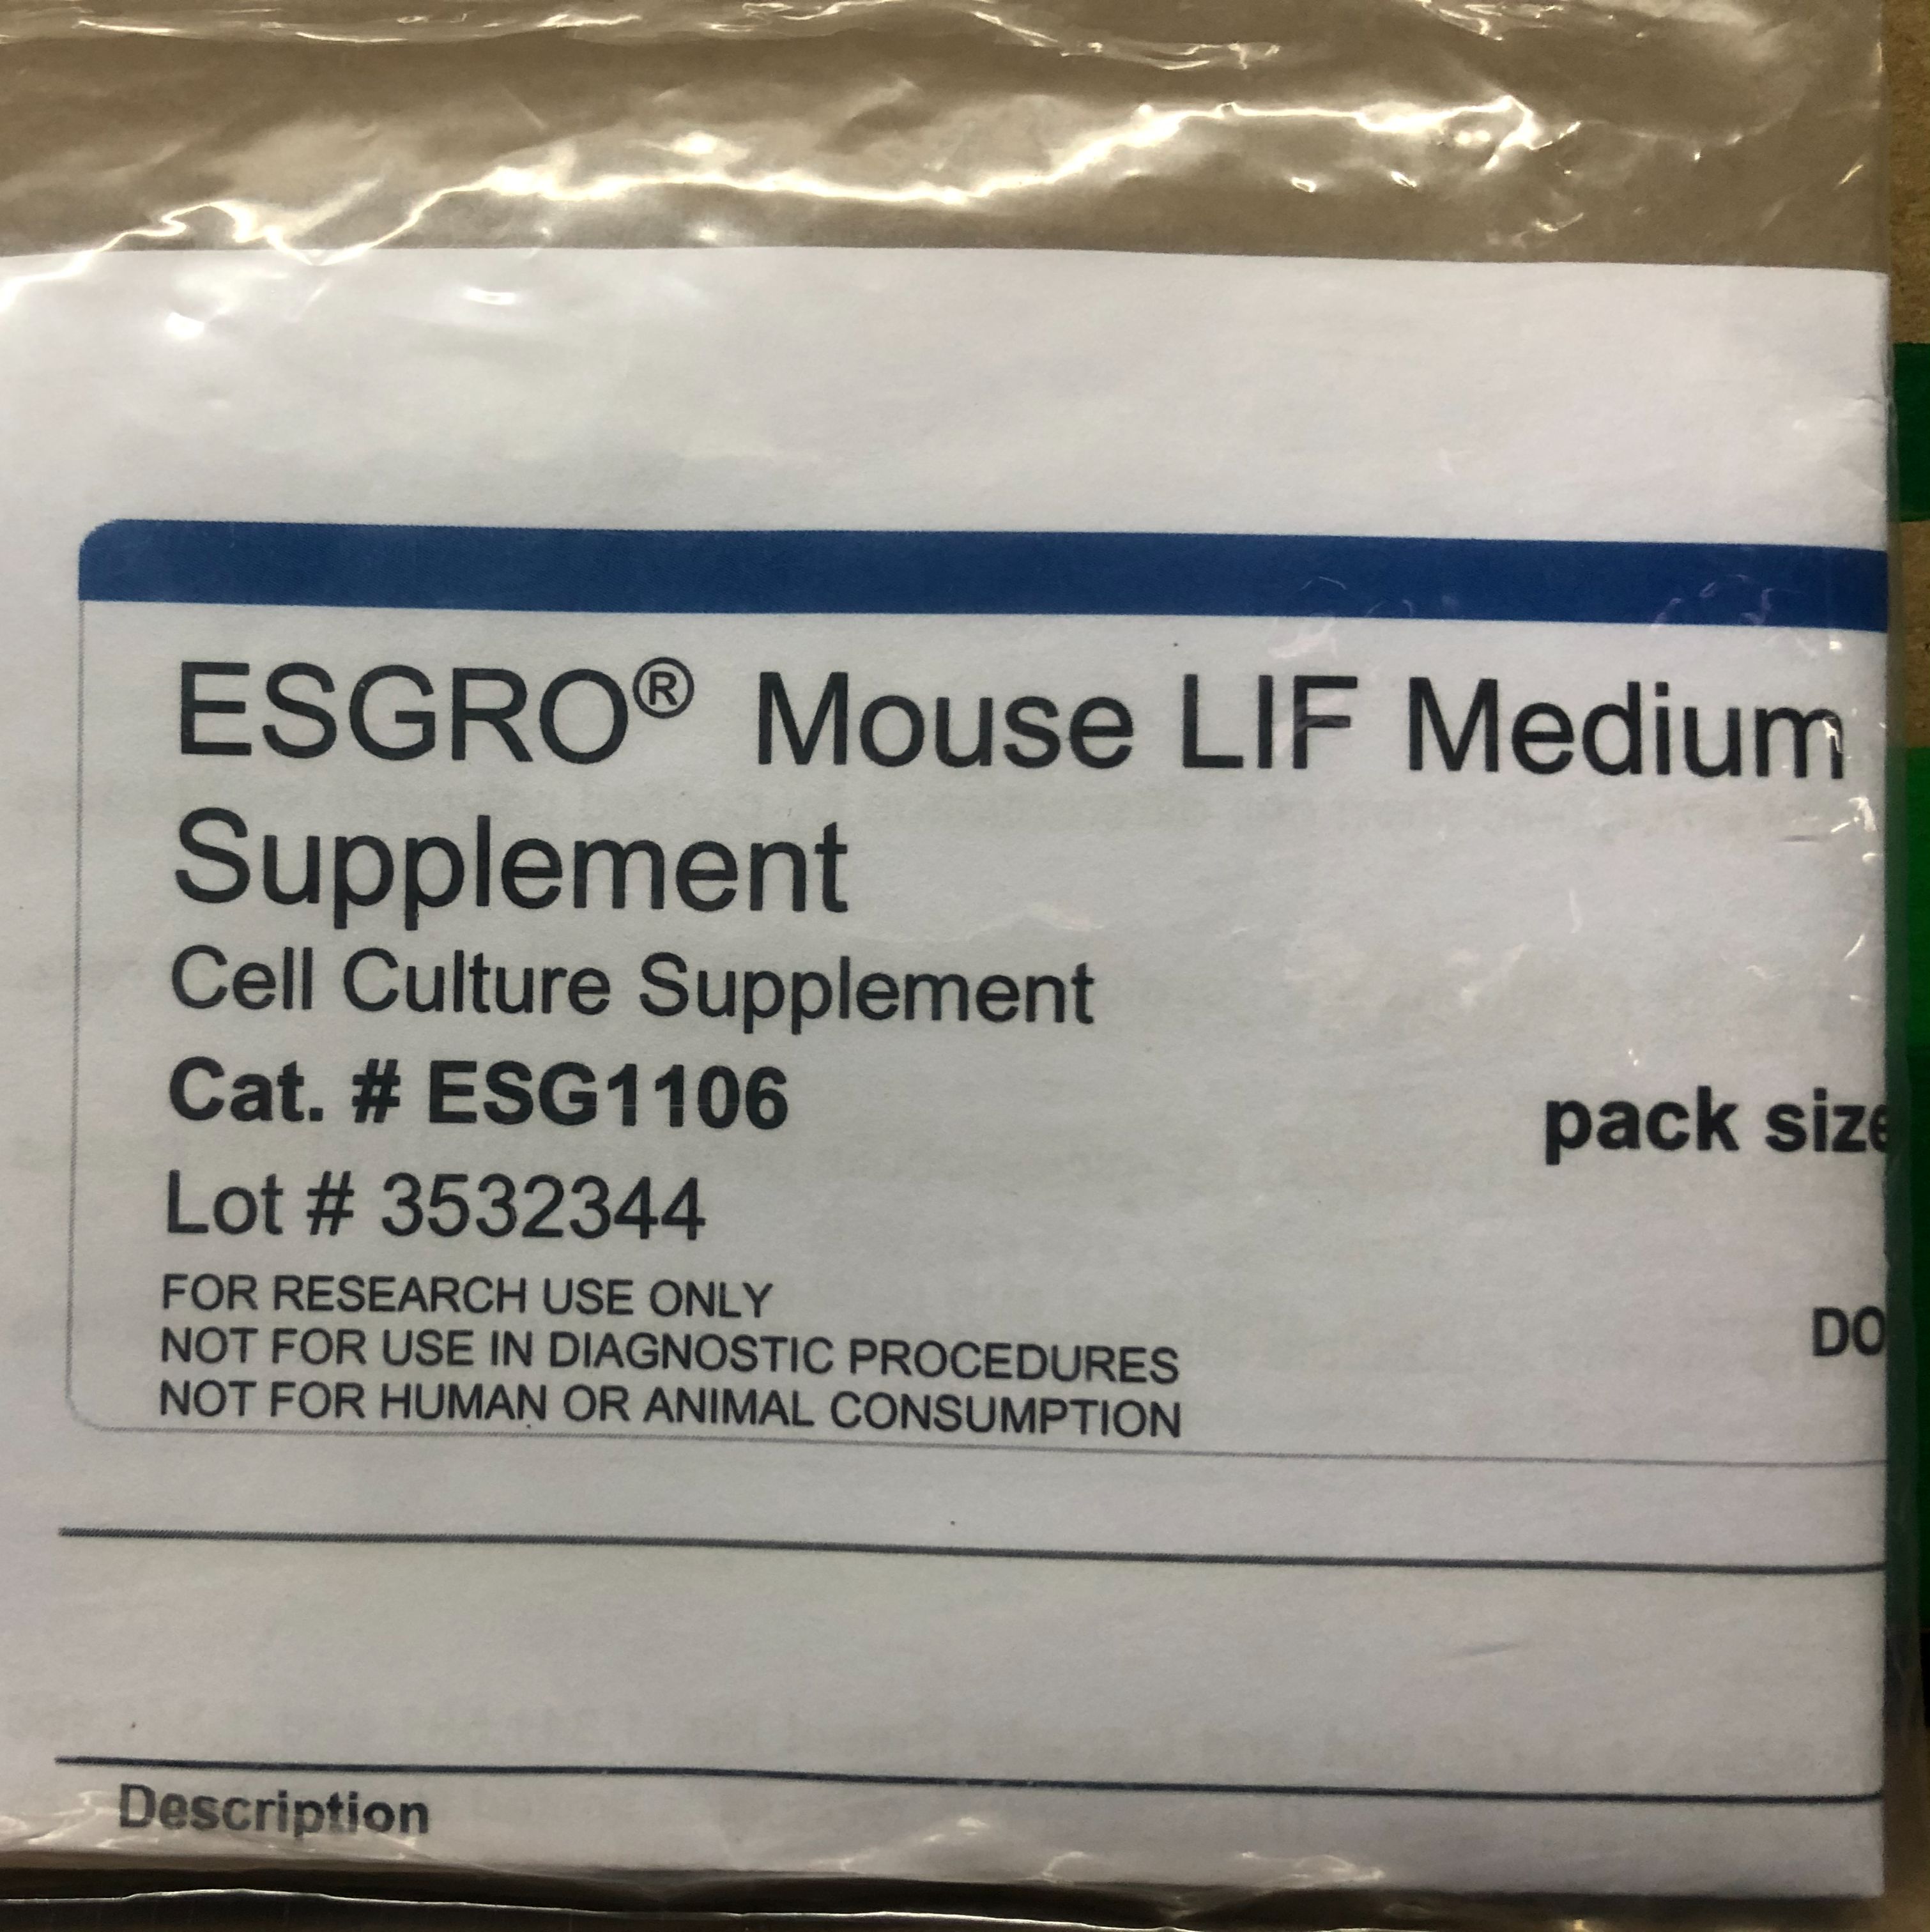 Millipore货号ESG1106现货ESGRO重组小鼠LIF蛋白13611631389上海睿安生物